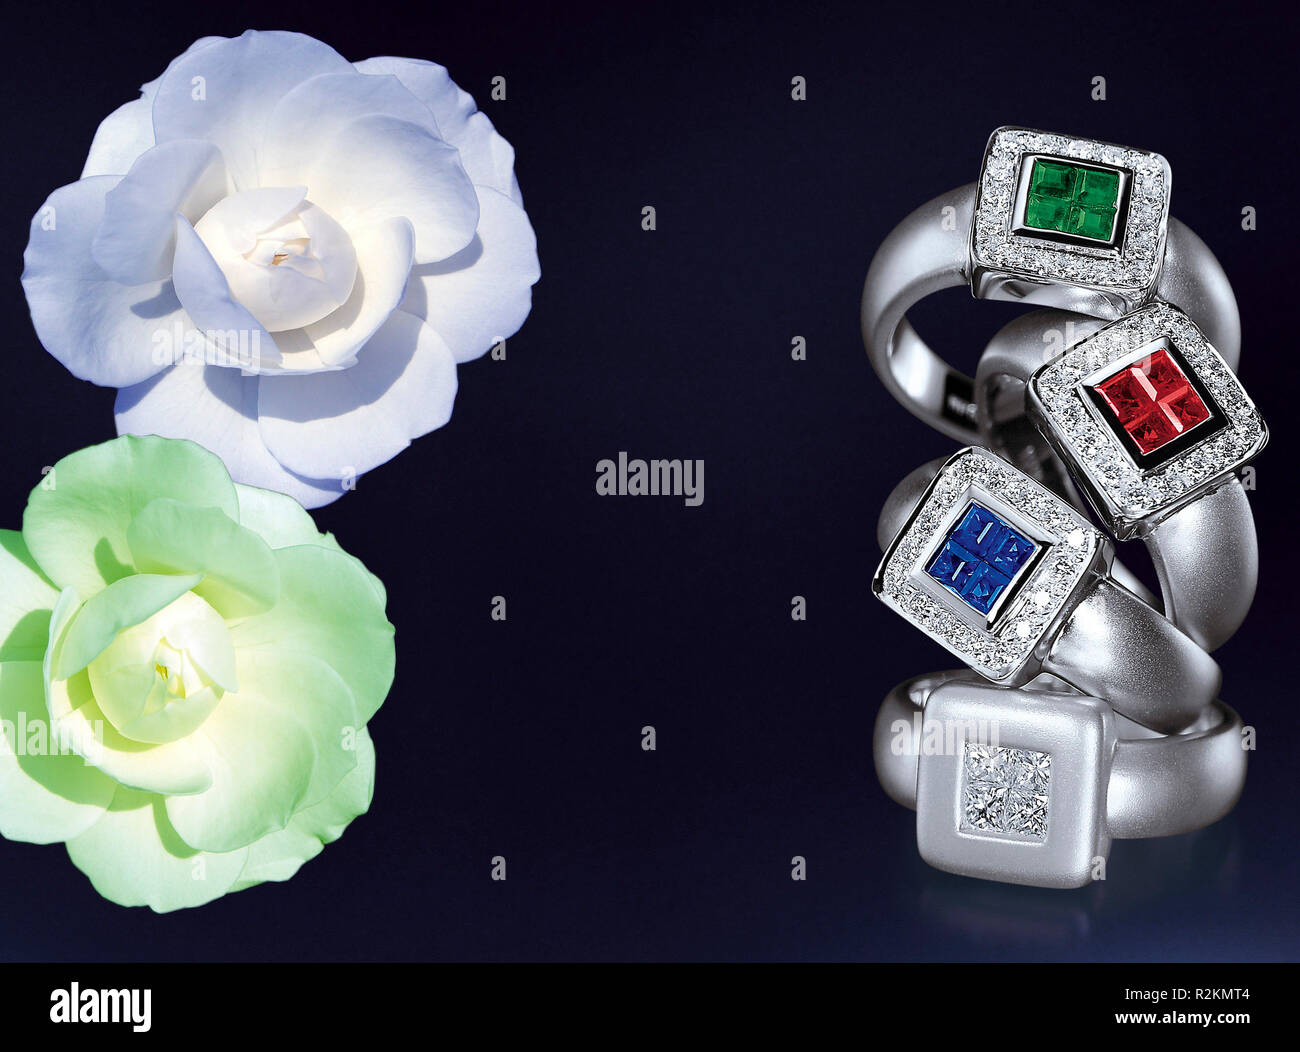 jewelry design - rings - silver jewelry Stock Photo